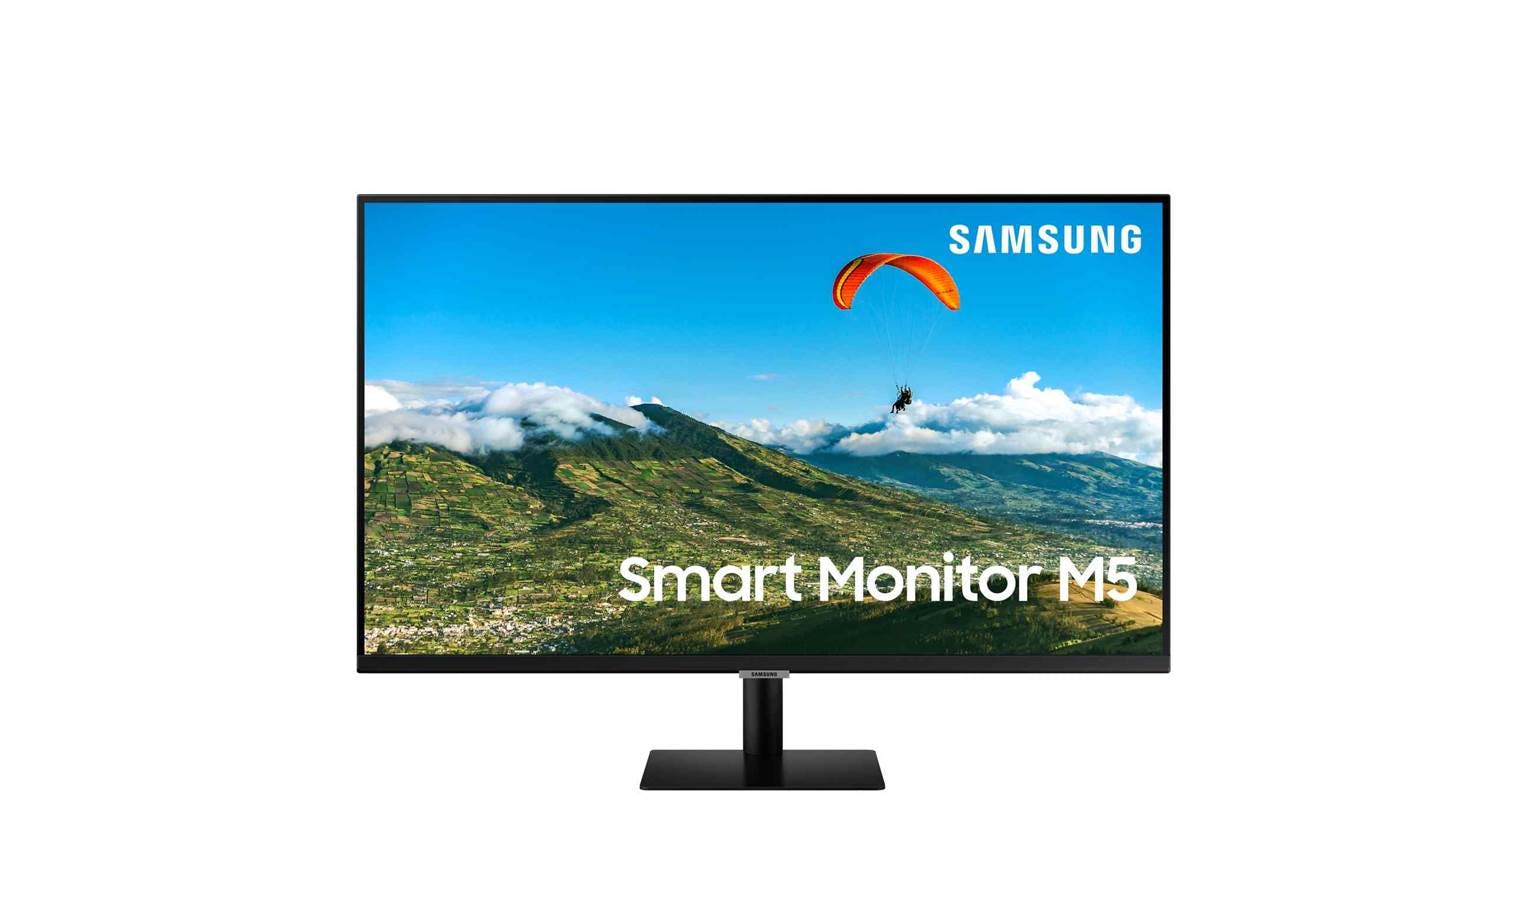 M5 monitor samsung smart qa1.fuse.tv: SAMSUNG